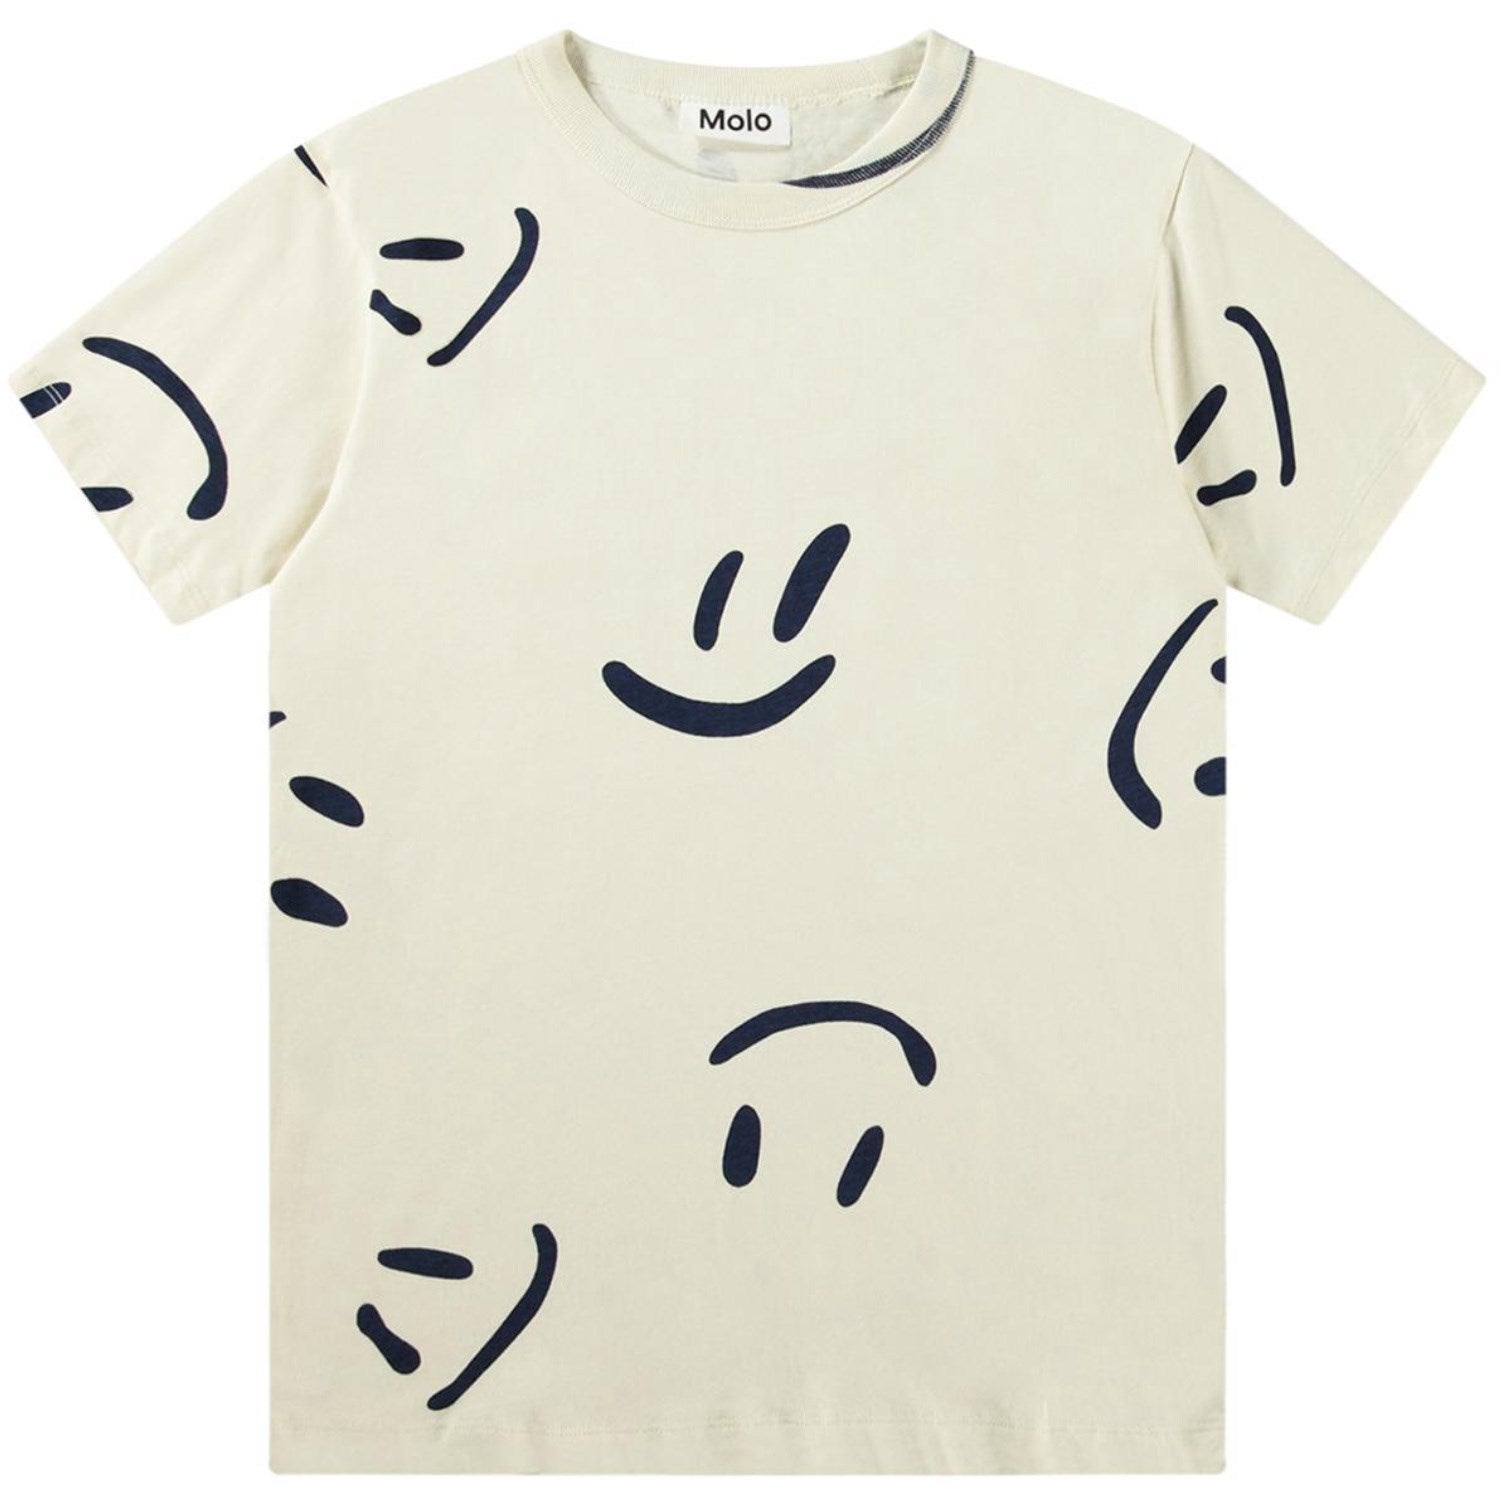 Molo Big Smiles Light Riley T-Shirt 2